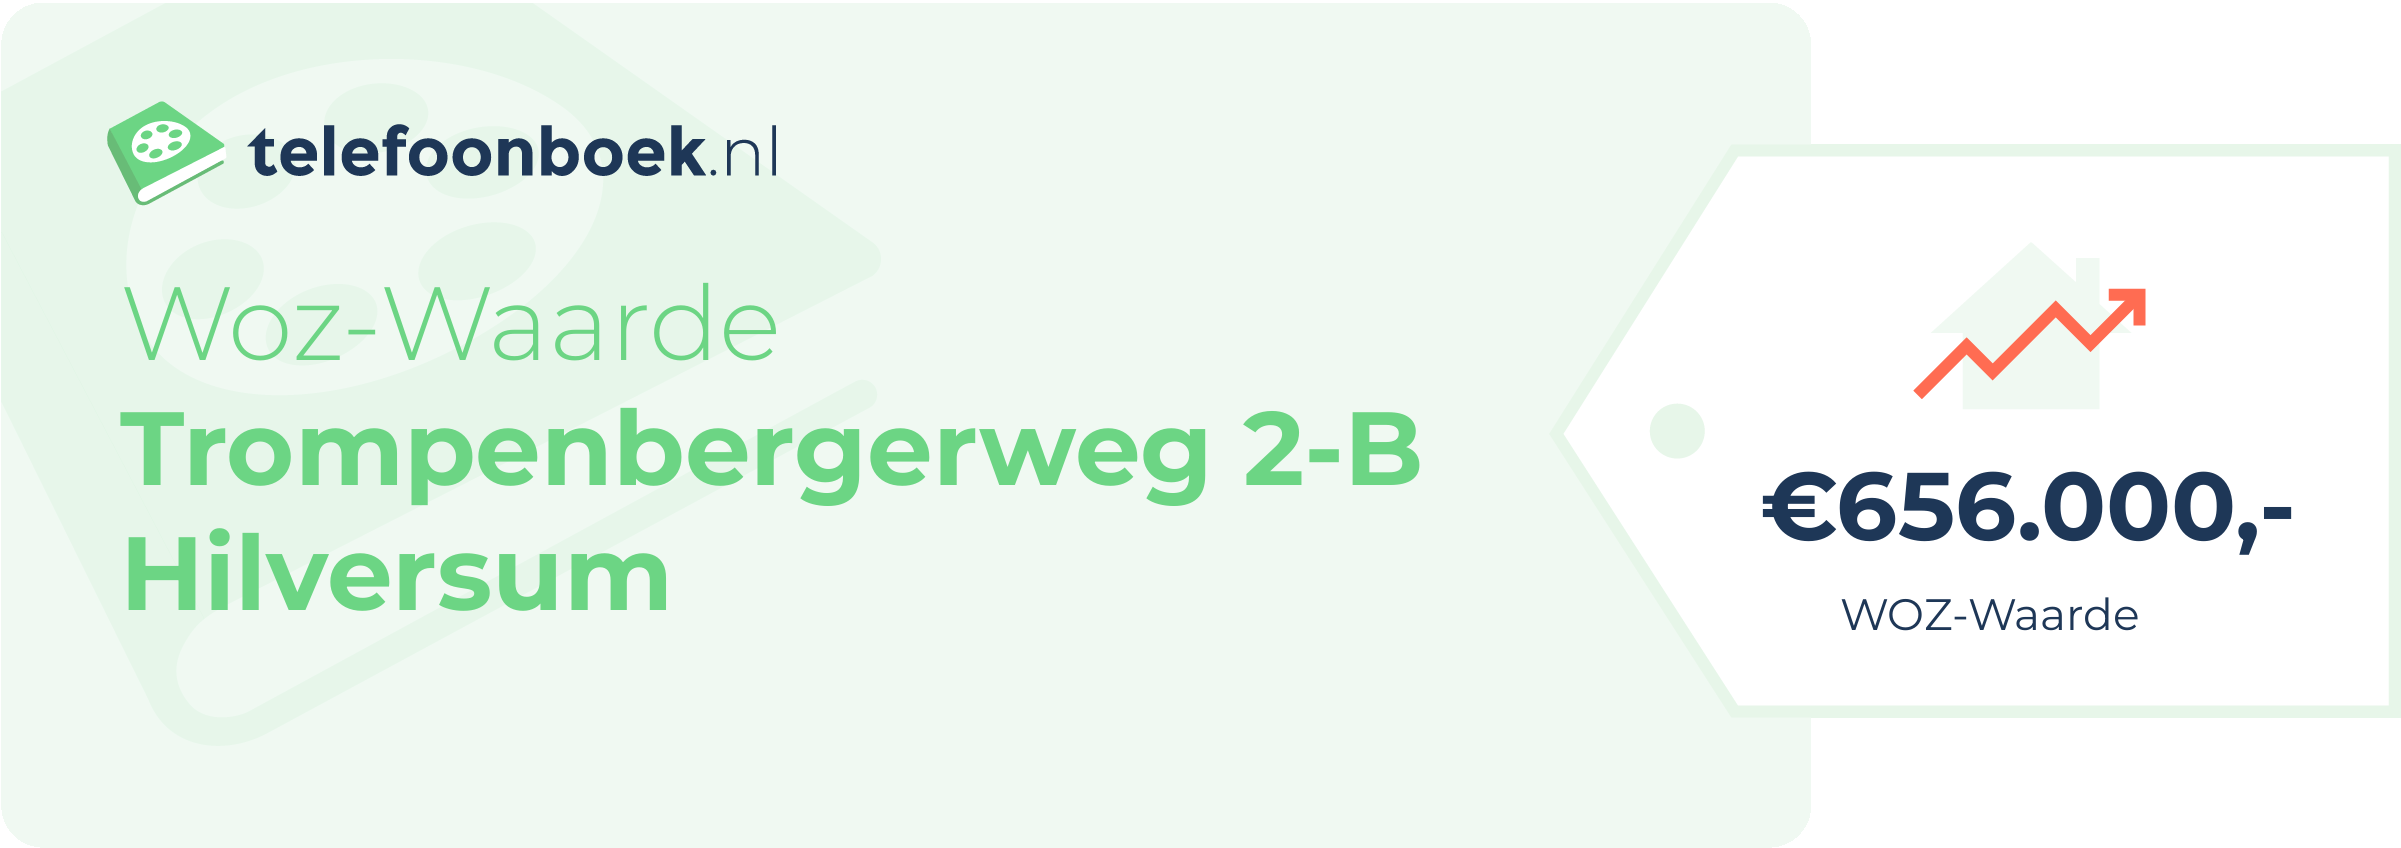 WOZ-waarde Trompenbergerweg 2-B Hilversum